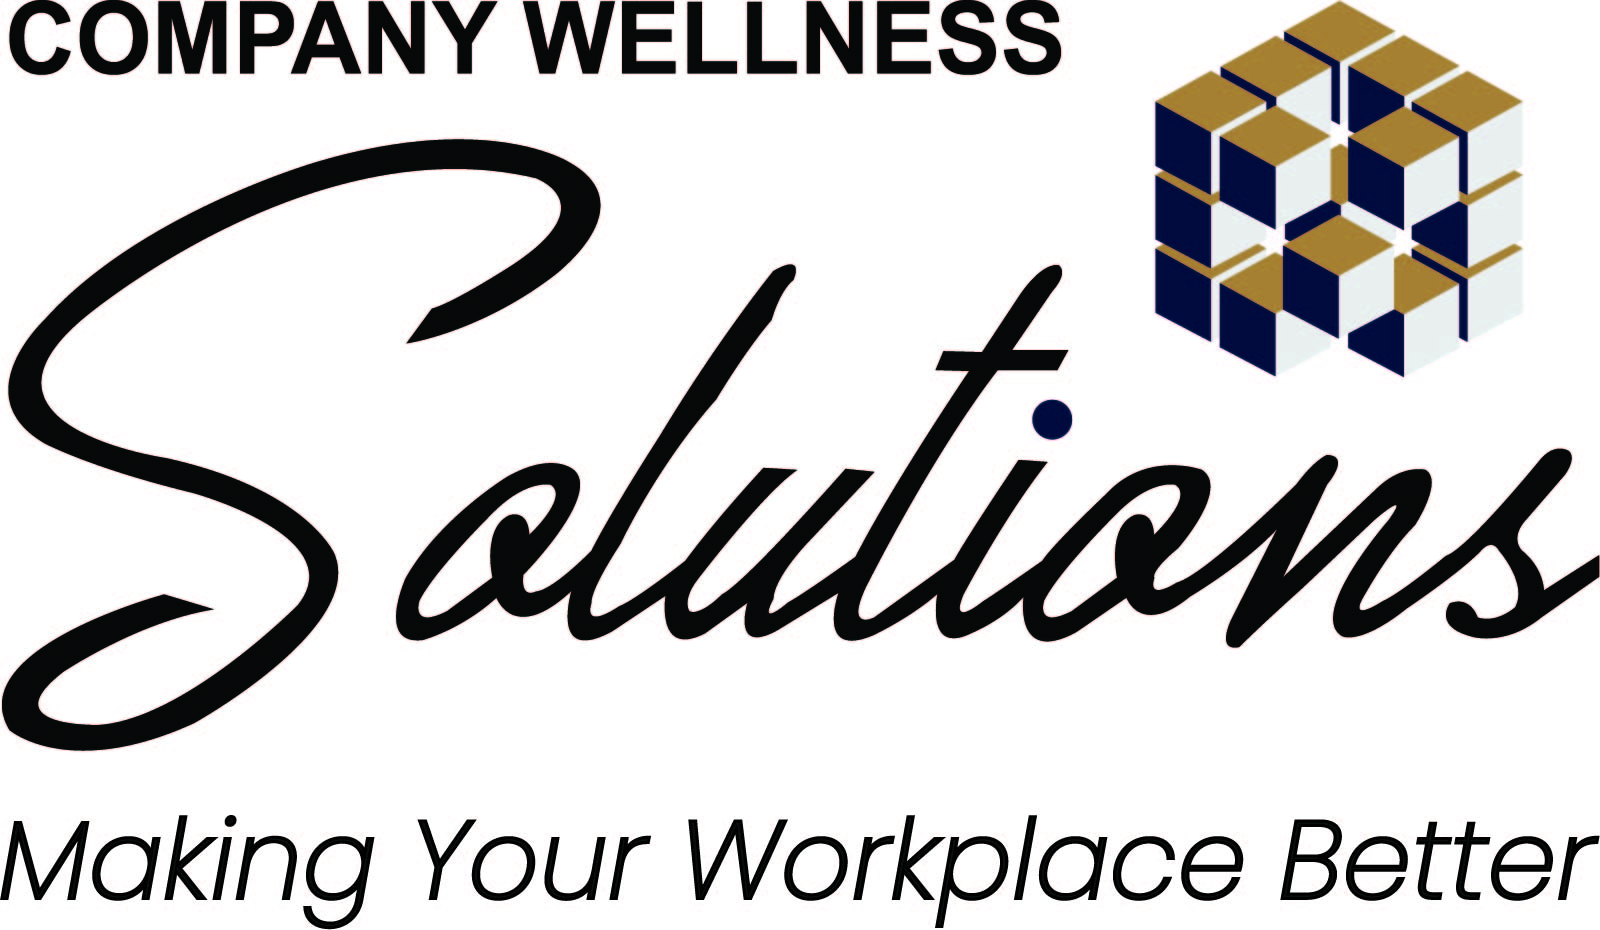 company wellness solutions